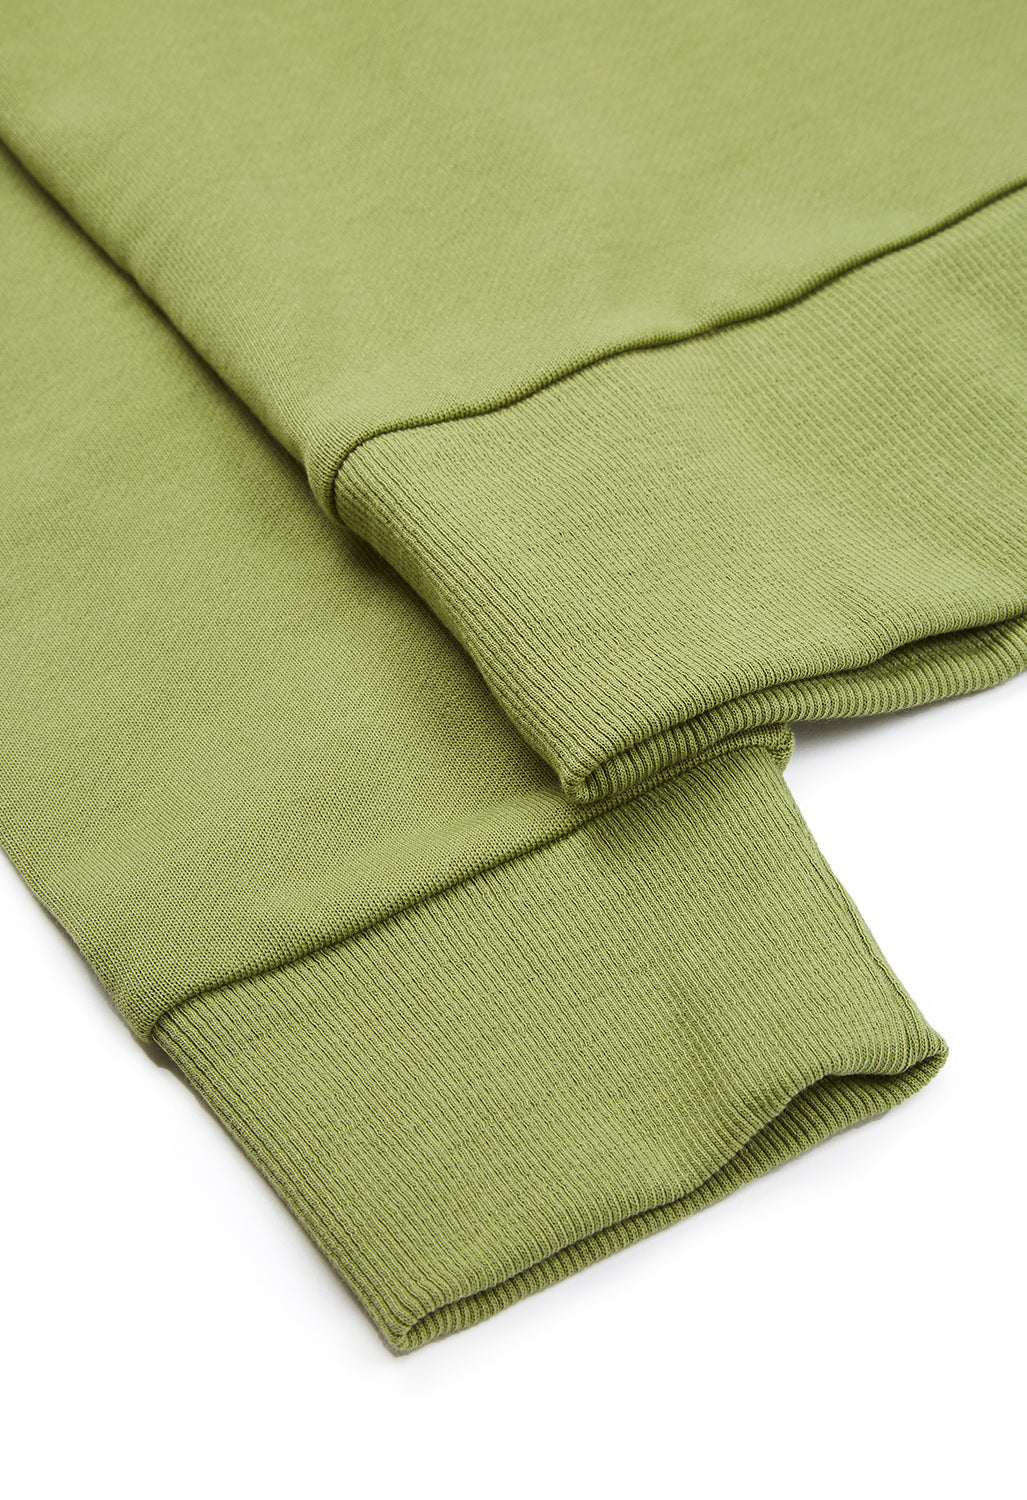 Patagonia Women's Regenerative Organic Certified Cotton Essential Hoody - Buckhorn Green